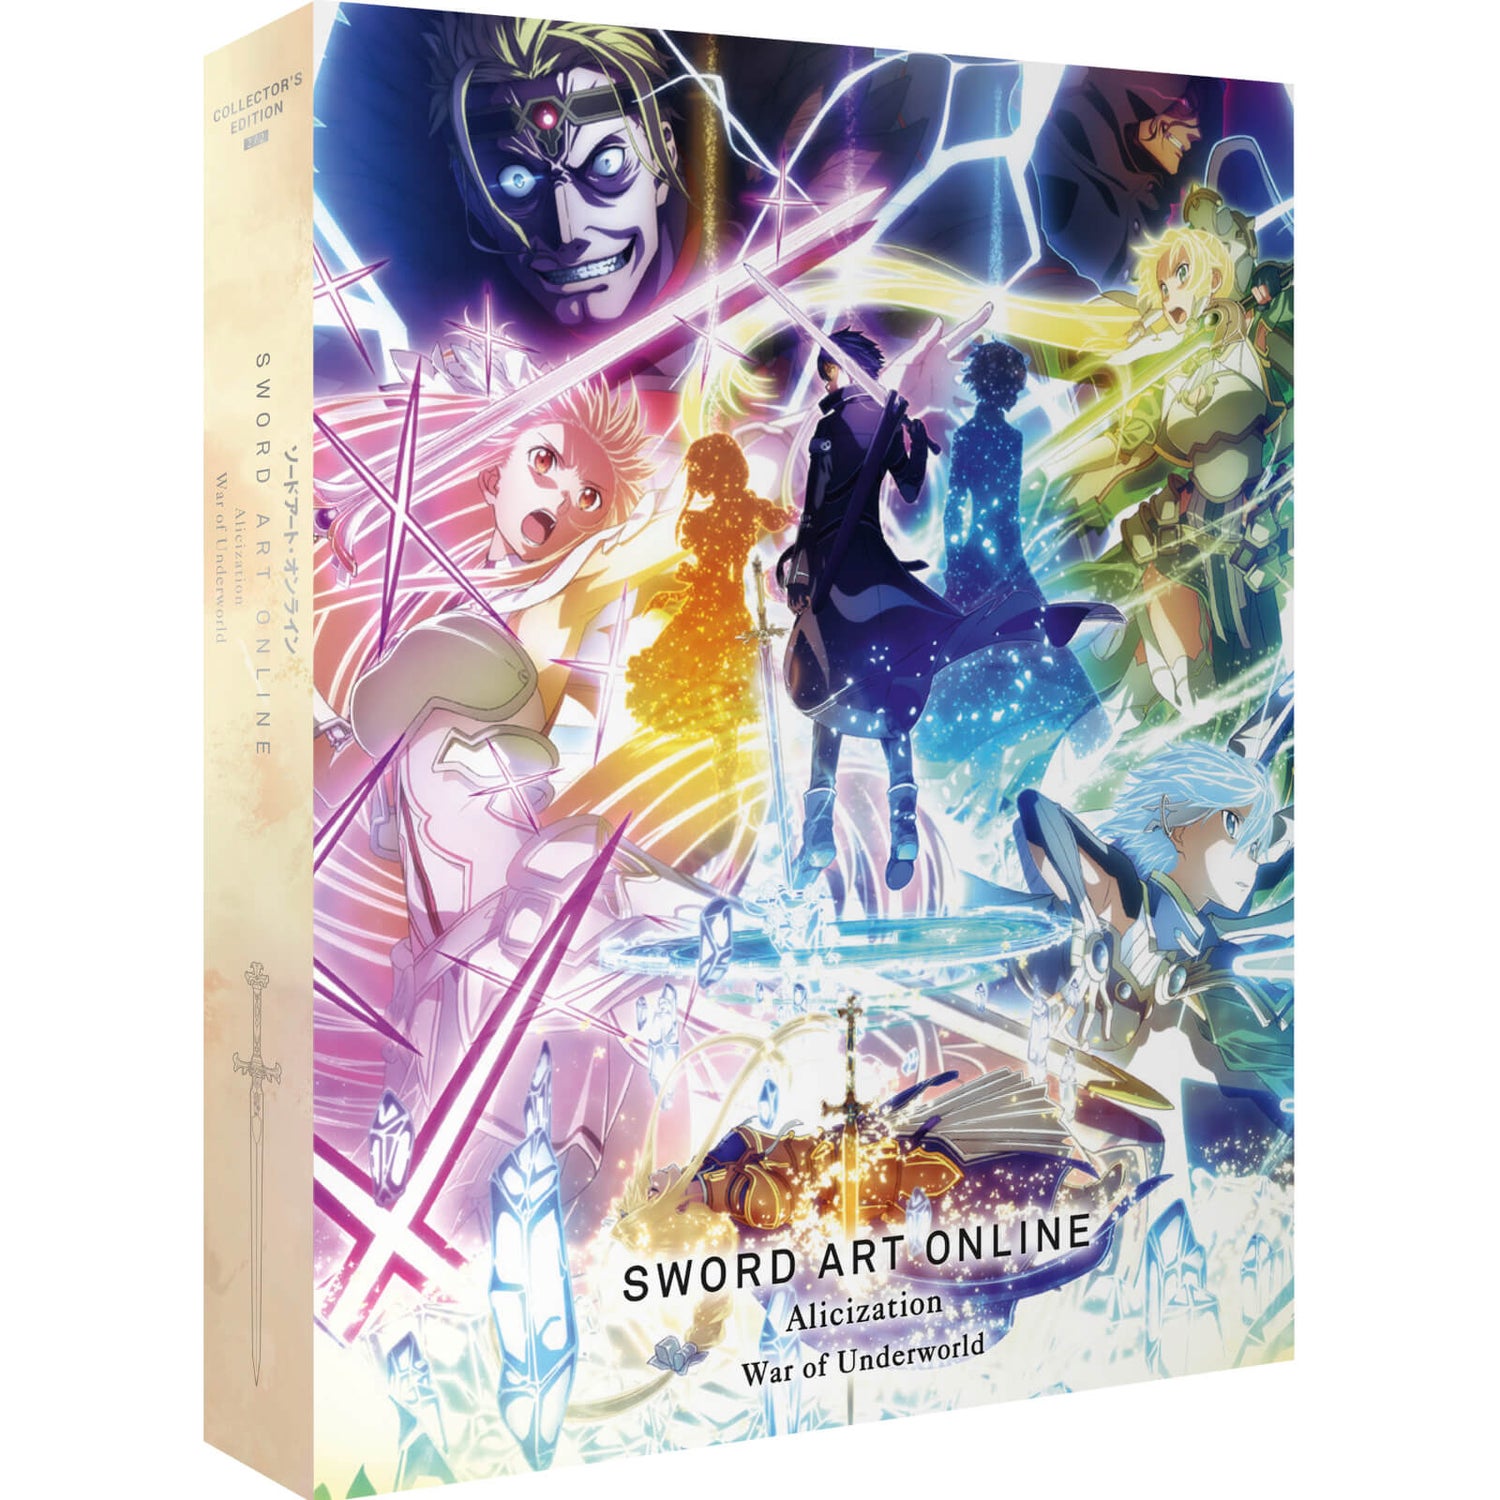 Sword Art Online: Alicization War of Underworld Part 2 (Collector's Limited Edition)